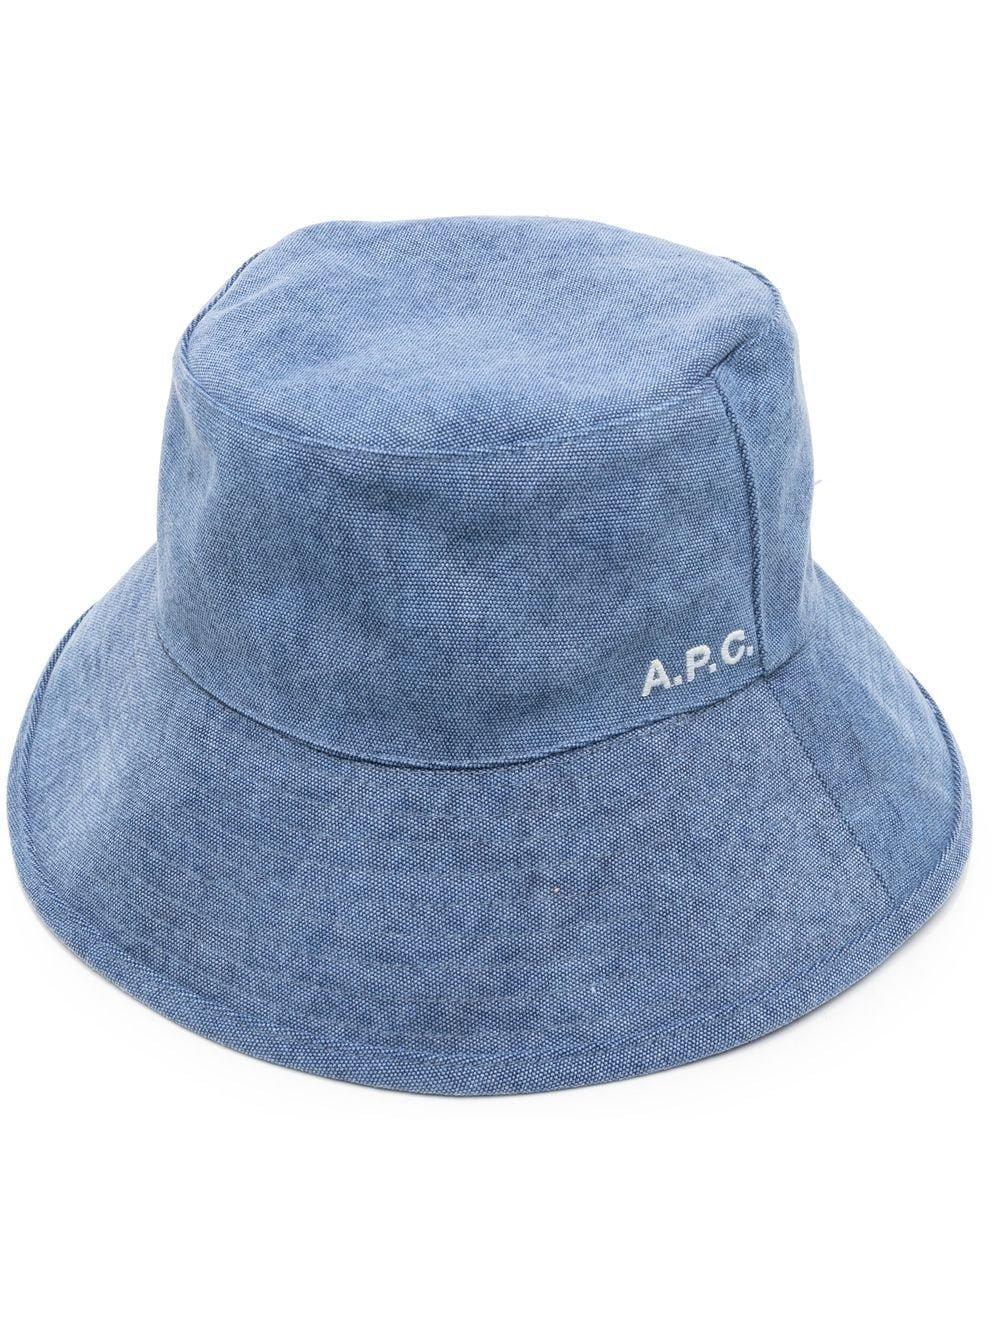 APC LOGO PRINTED BUCKET HAT